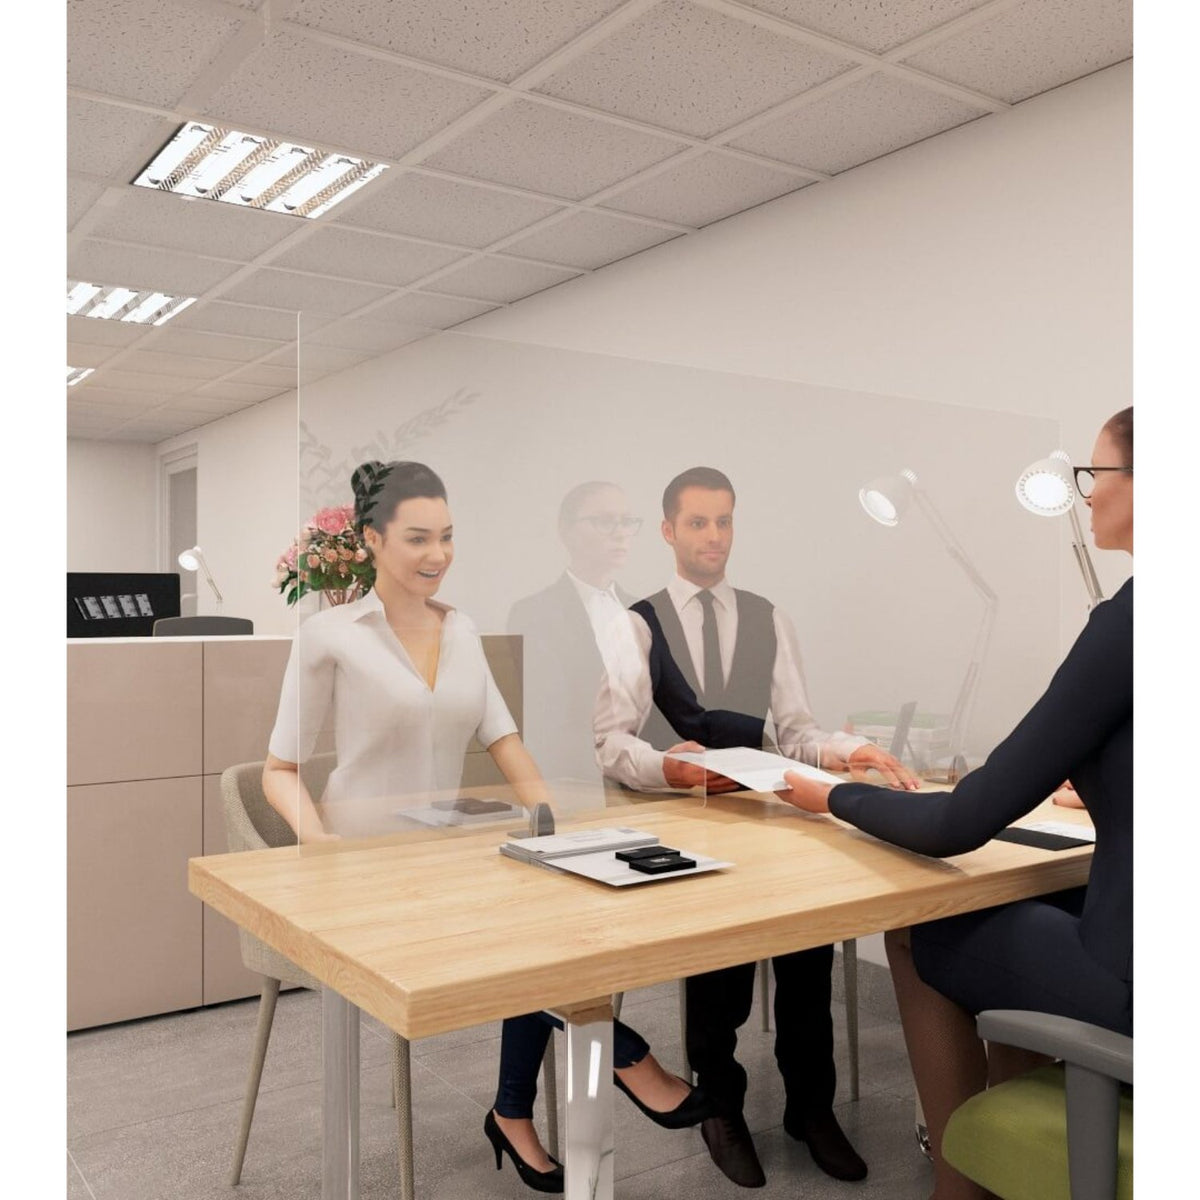 Duckys Office Furniture - Acrylic Wellness Screens - Duckys Office Furniture